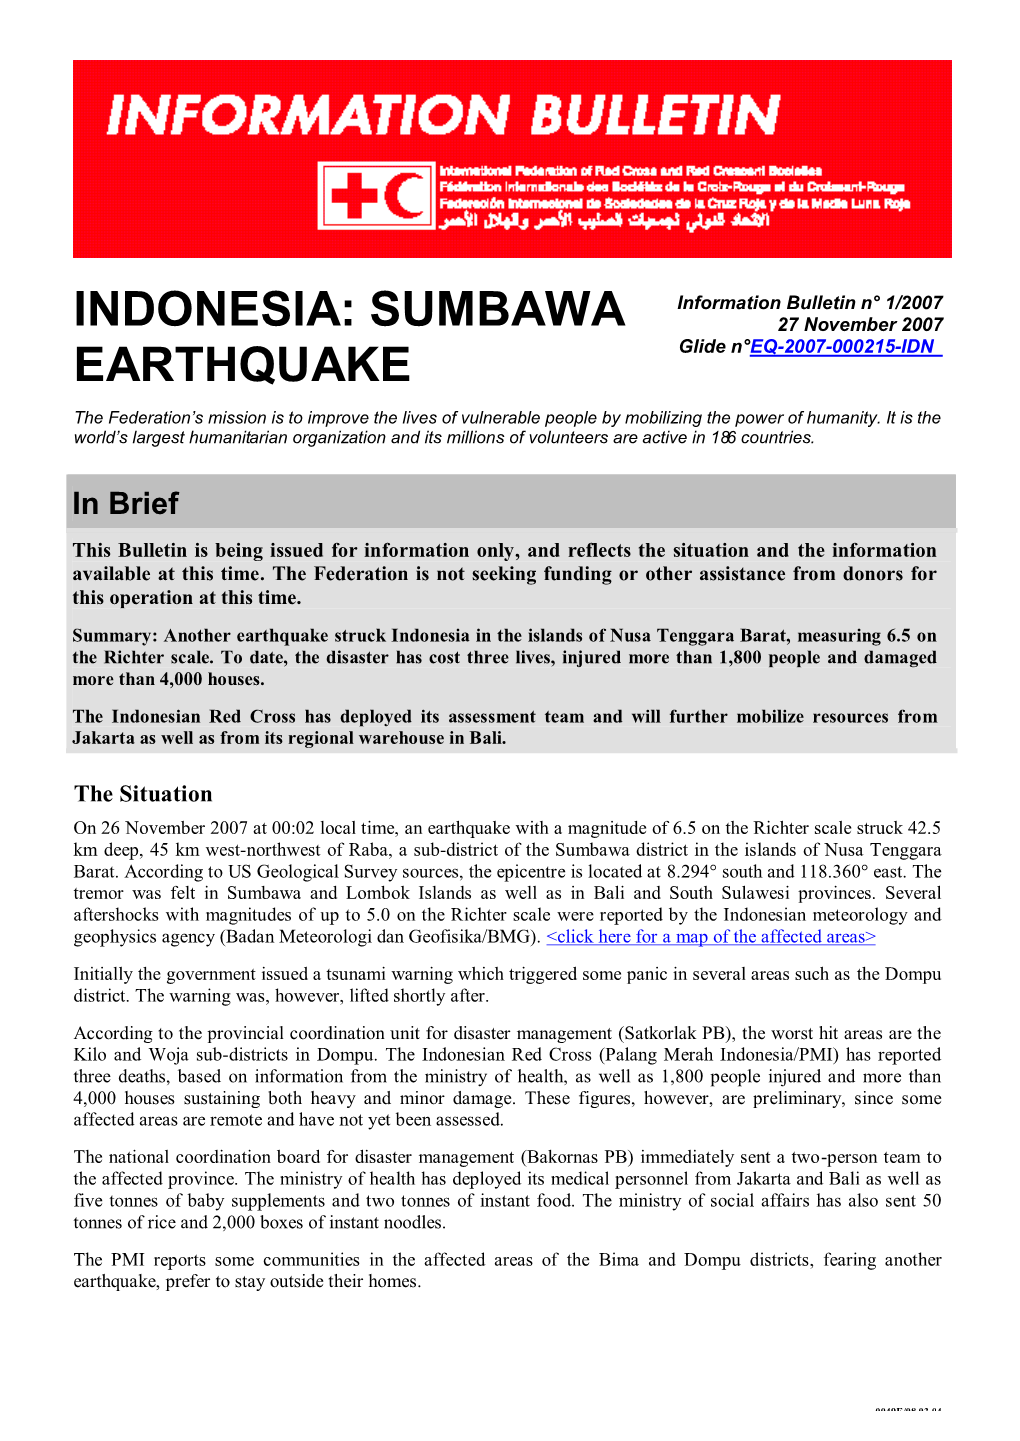 Indonesia: Sumbawa Earthquake; Information Bulletin No